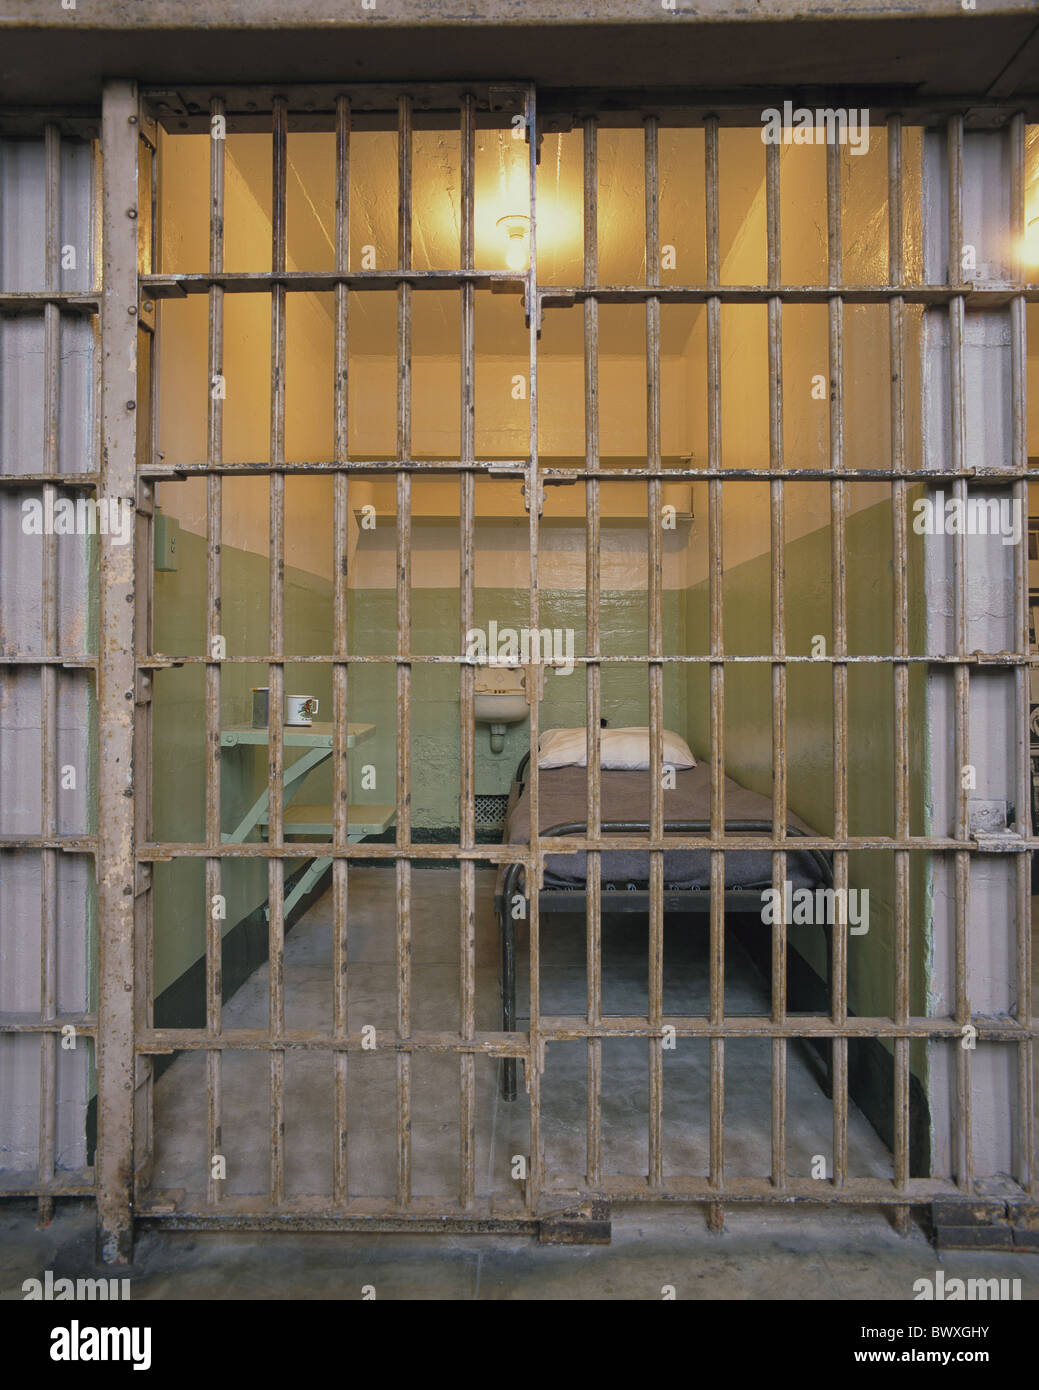 Gefängnis Alcatraz Gefängnis in Zelle Gitter Ausrüstung Institution Lampe San Francisco USA Stockfoto